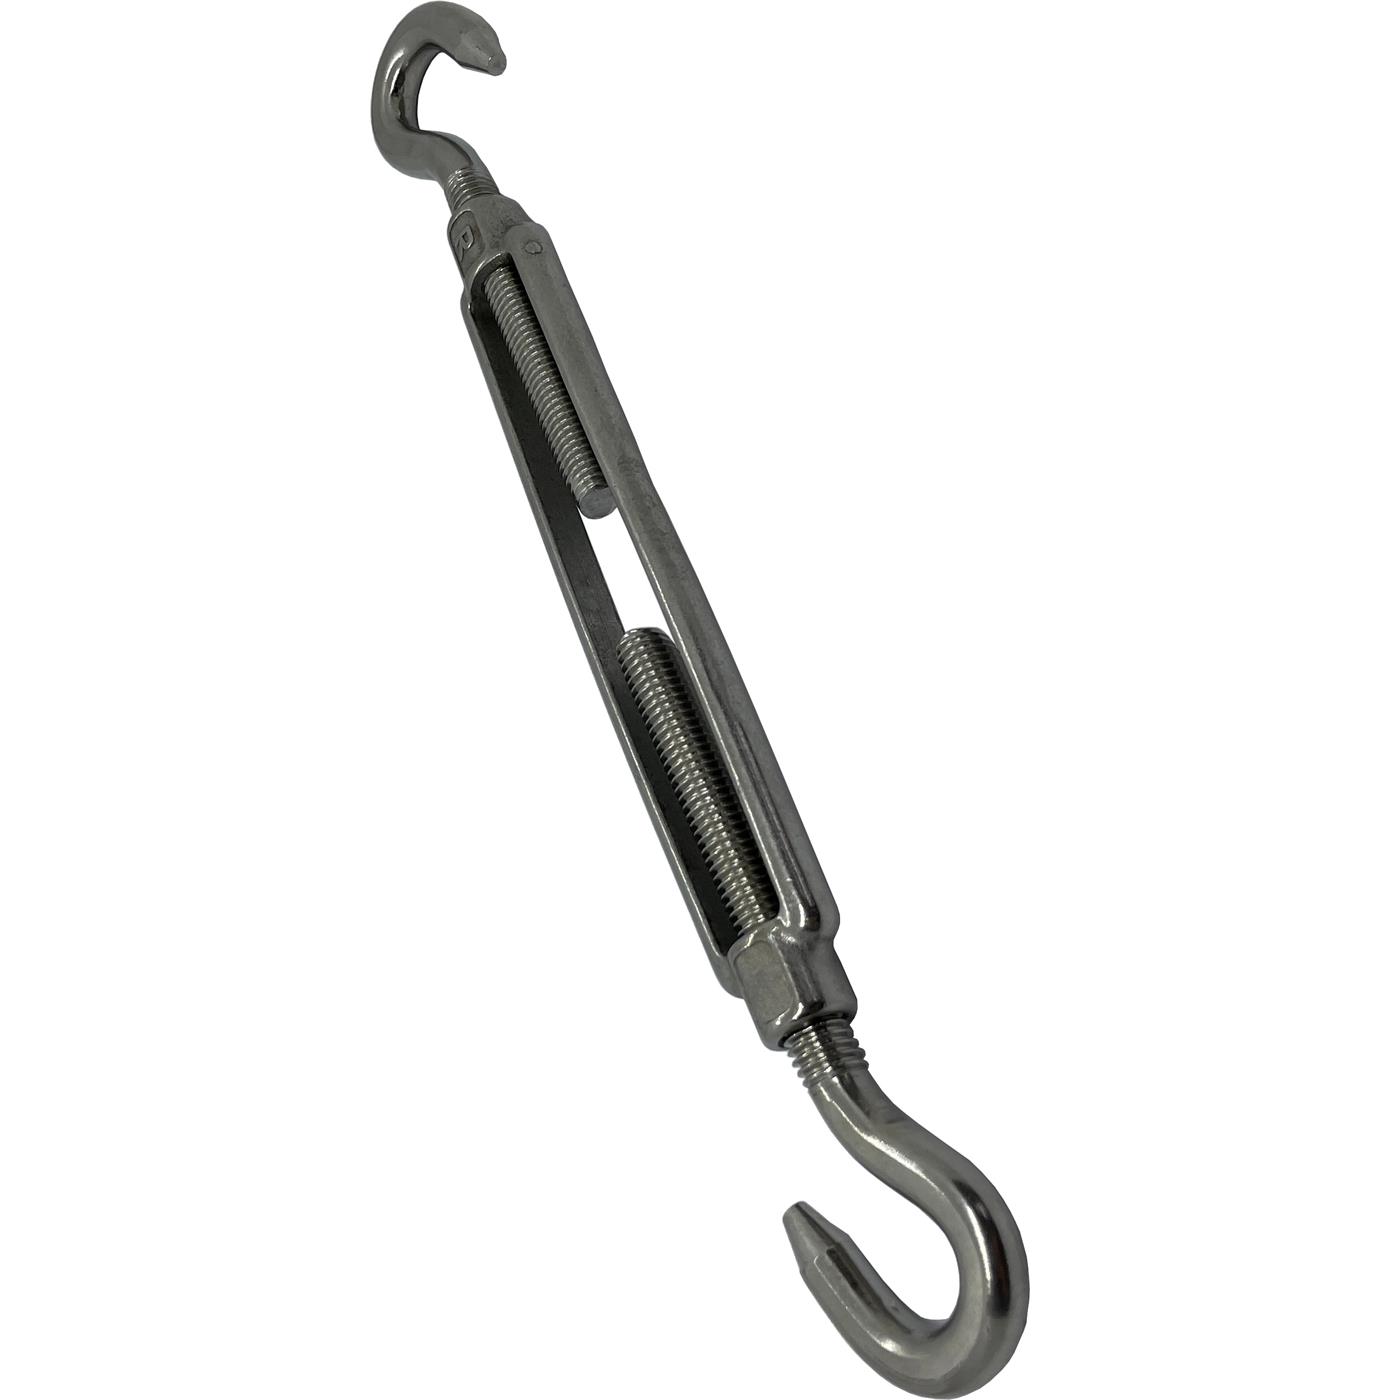 Rope tensioner Hook-Hook Stainless steel V2A 304 M6 Turnbuckle Shroud clamp